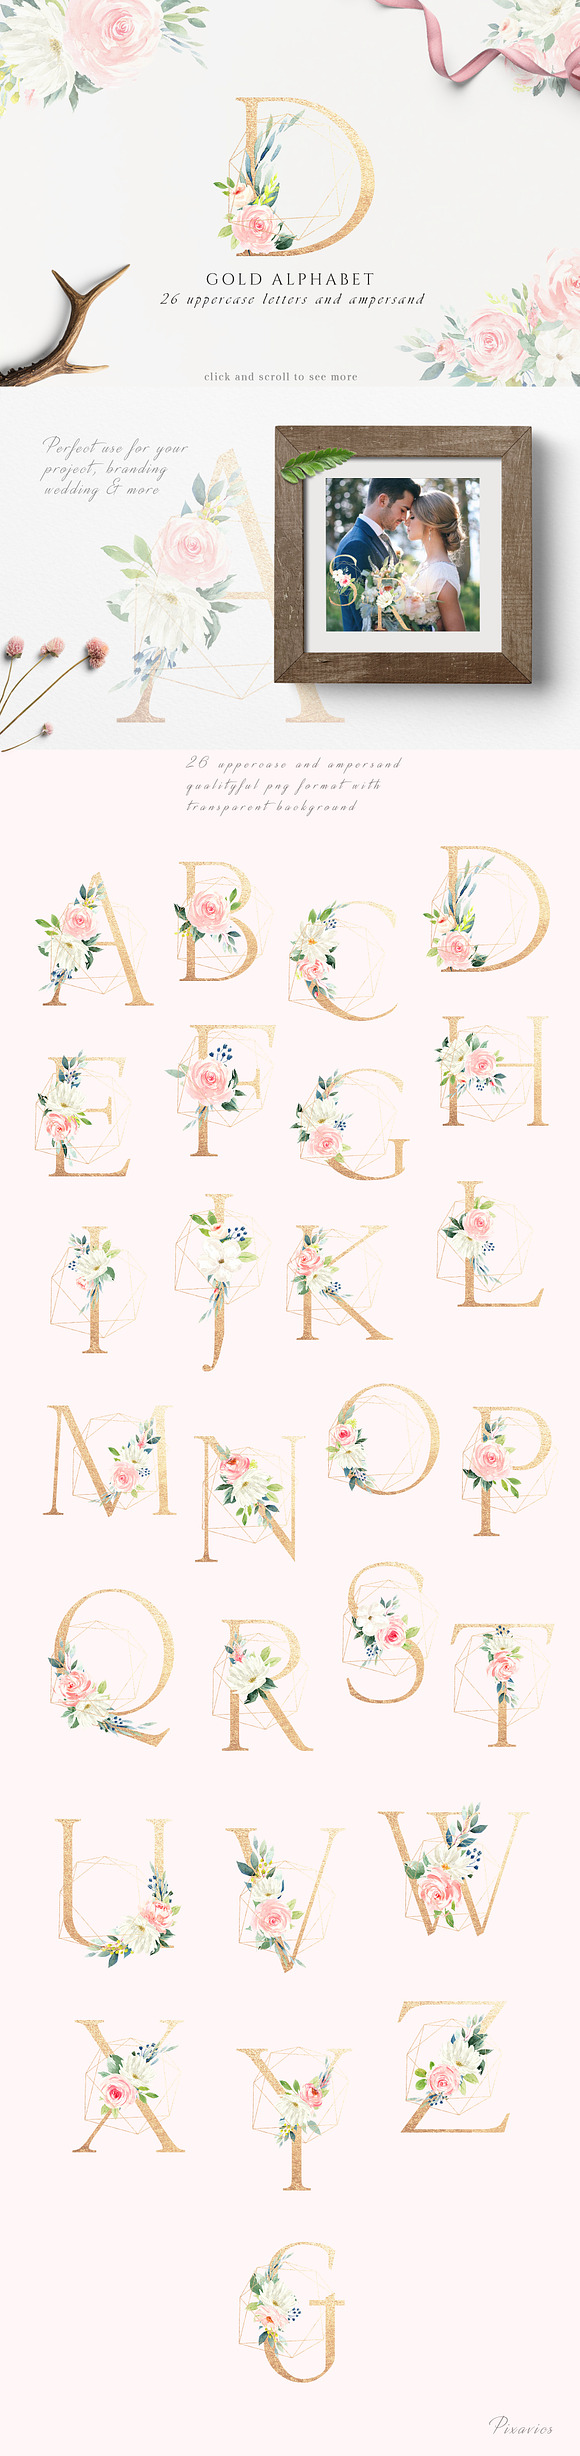 Floral Alphabet Design Set in Illustrations - product preview 3